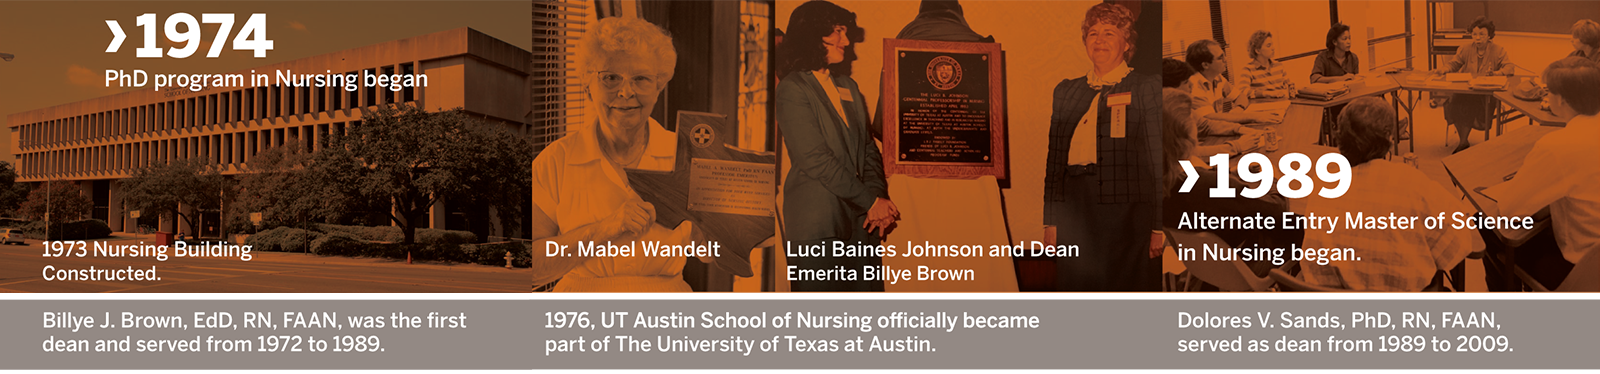 UT Austin School of Nursing Timeline